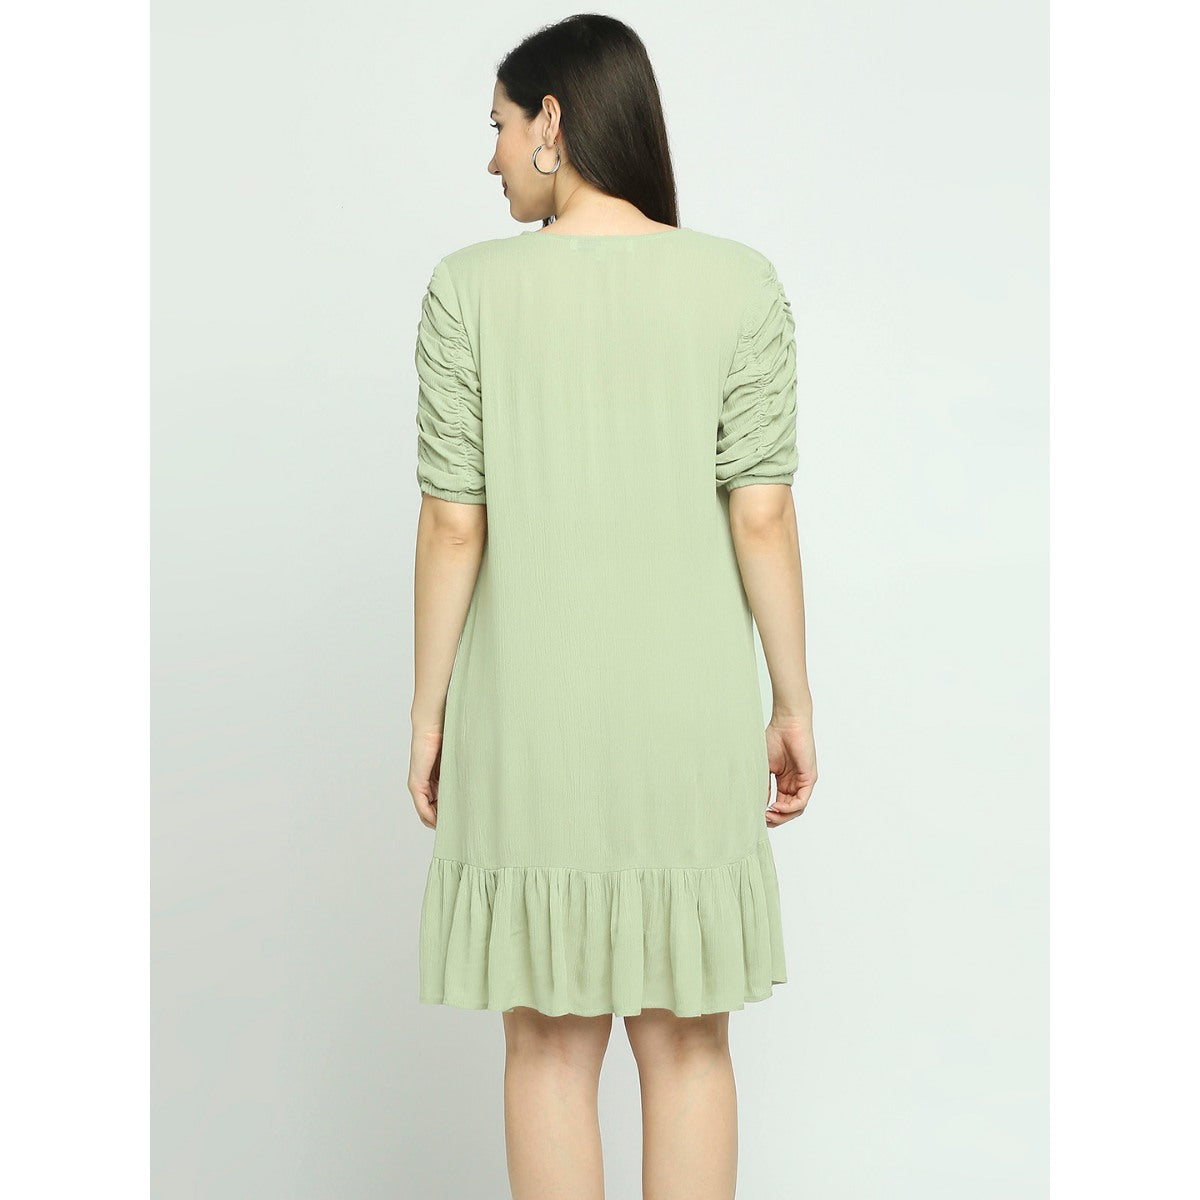 Mantra green elasticated sleeved dress